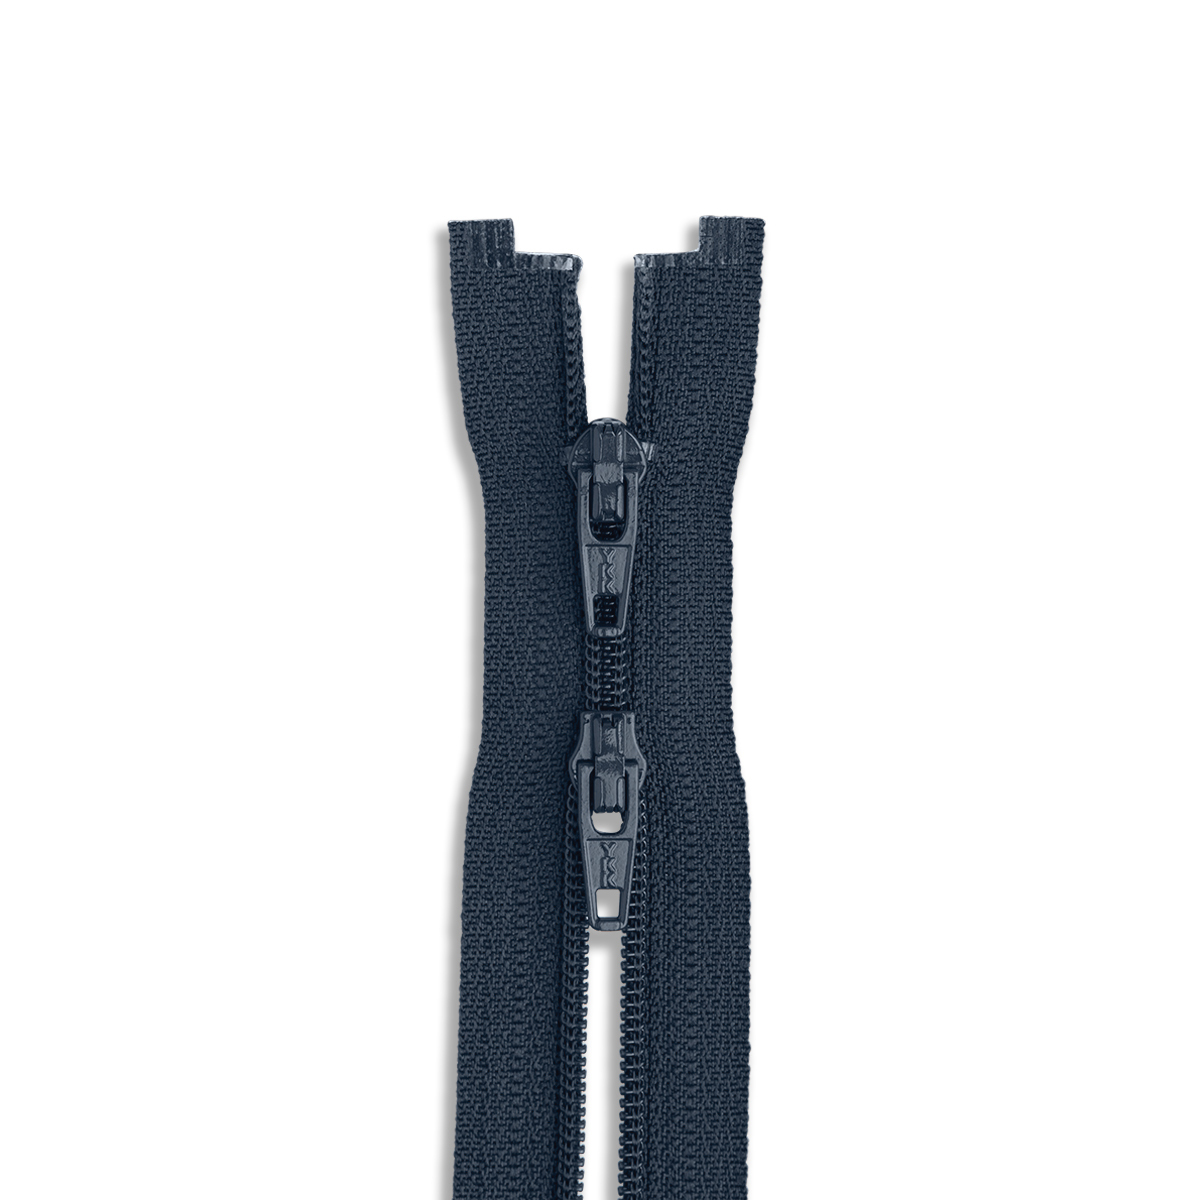 Sea Blue) Nylon Two Way Jacket Zipper, 30